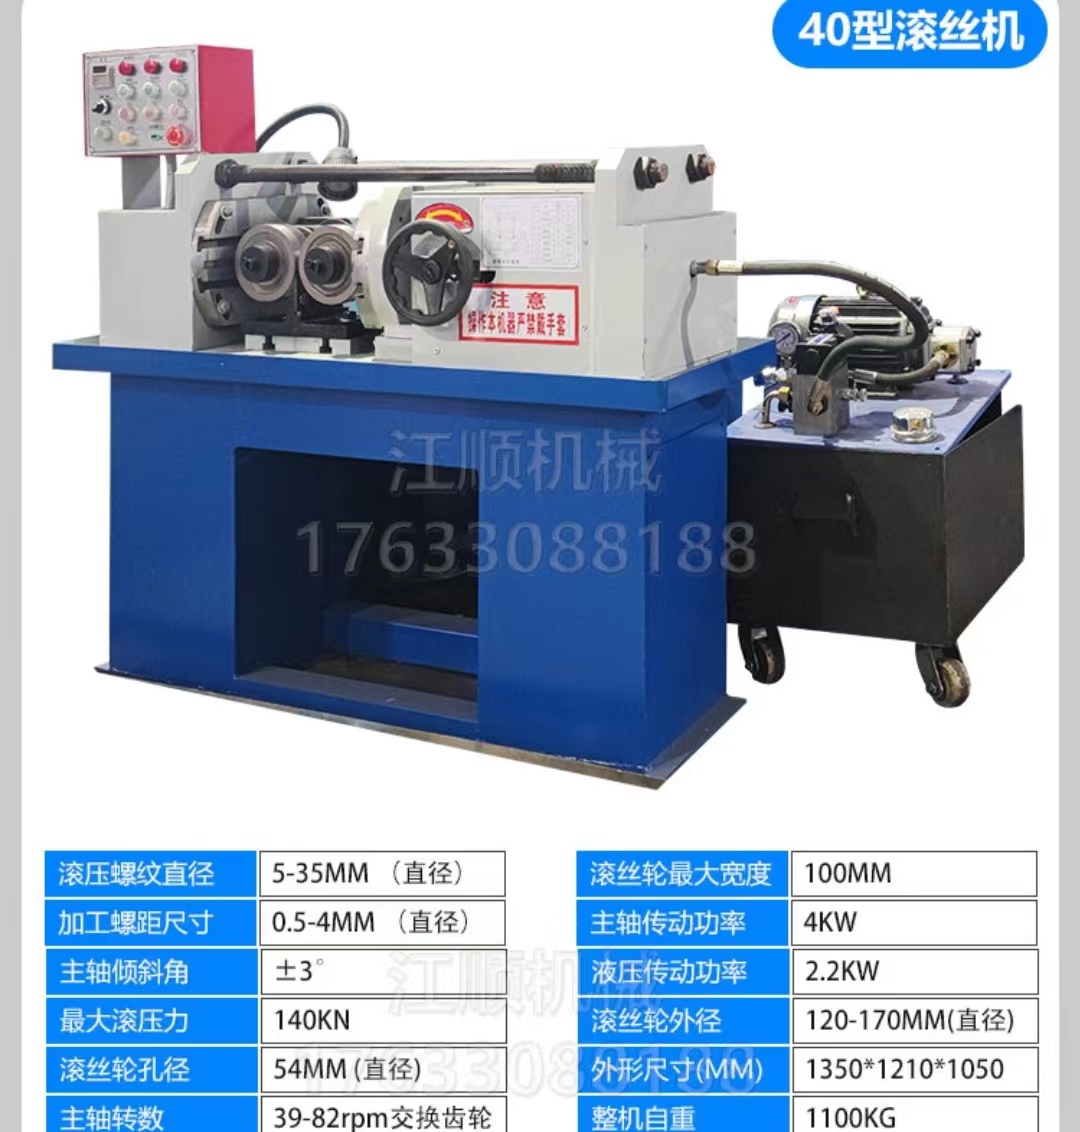 Jiangshun CNC thread rolling machine, fully automatic thread rolling machine, steel bar straight thread hydraulic knurling machine manufacturer